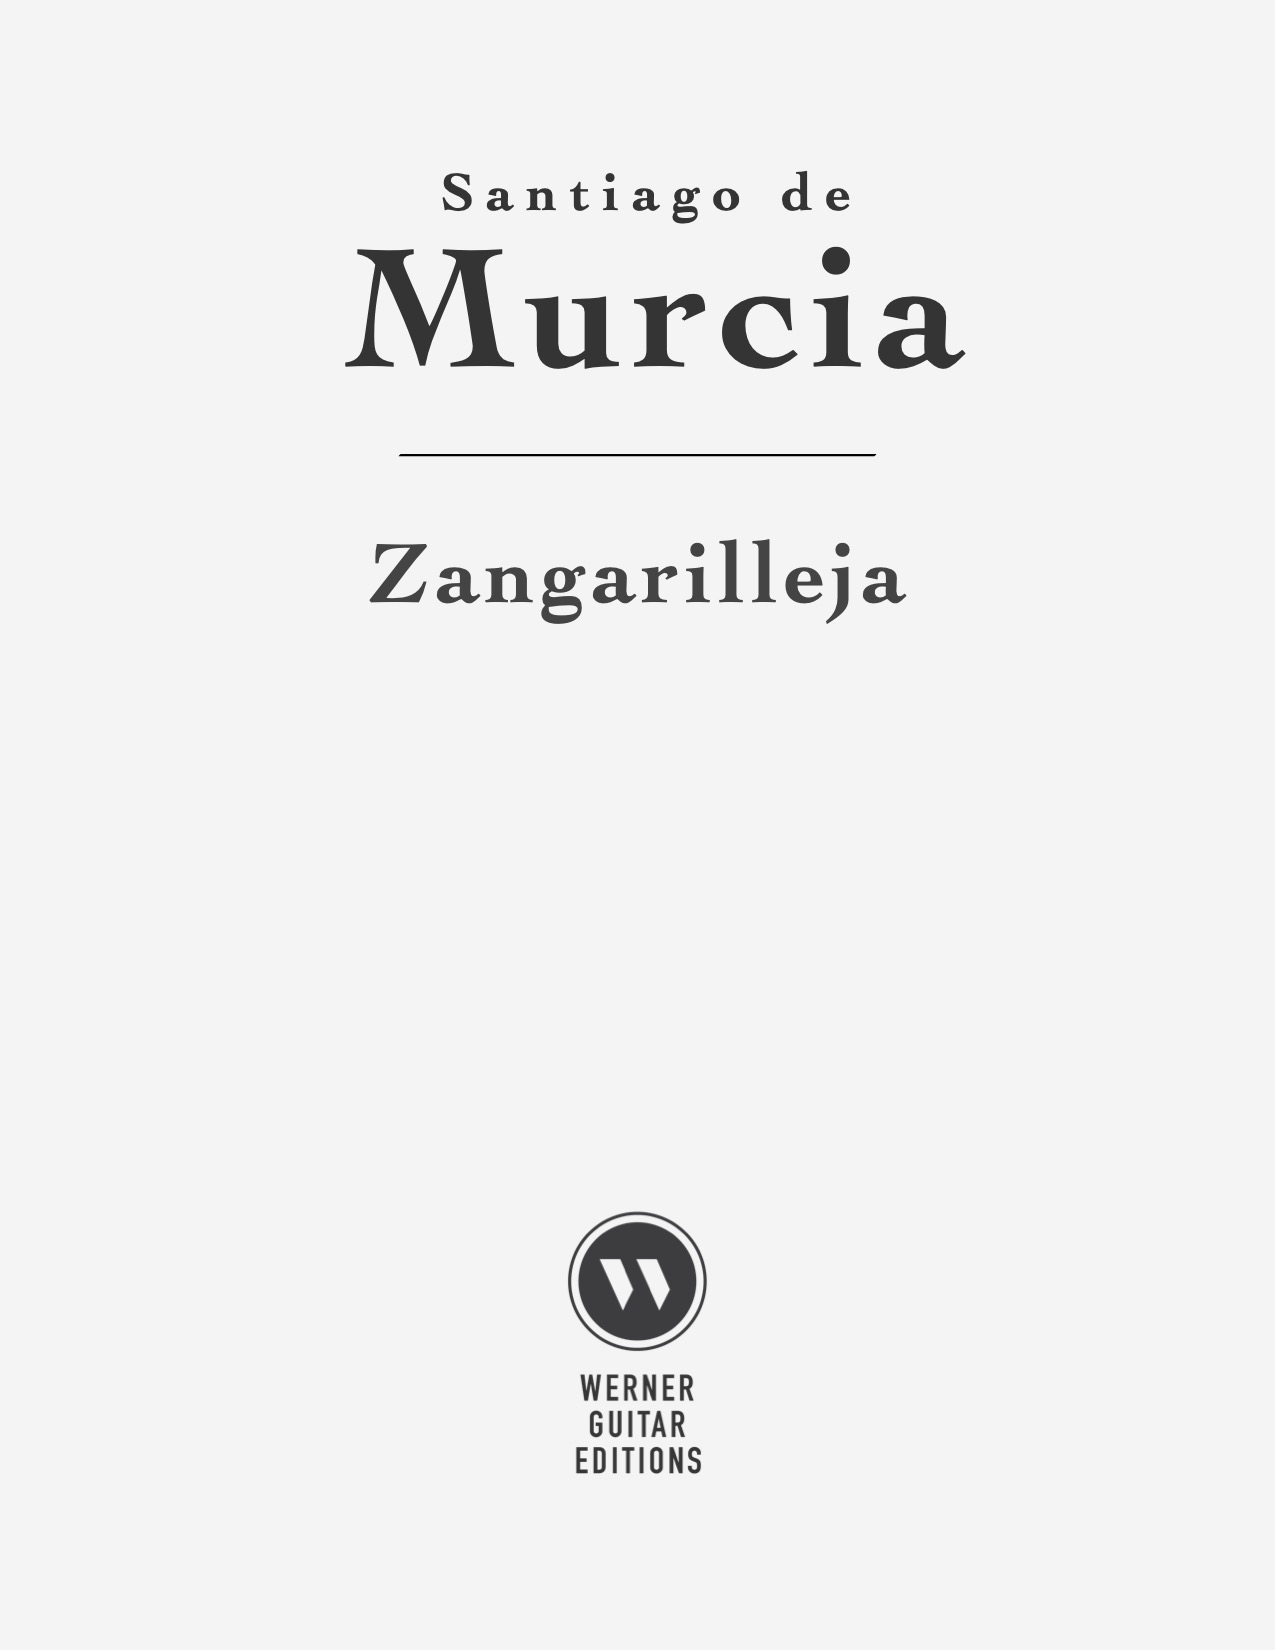 Zangarilleja by Santiago de Murcia (Cover)